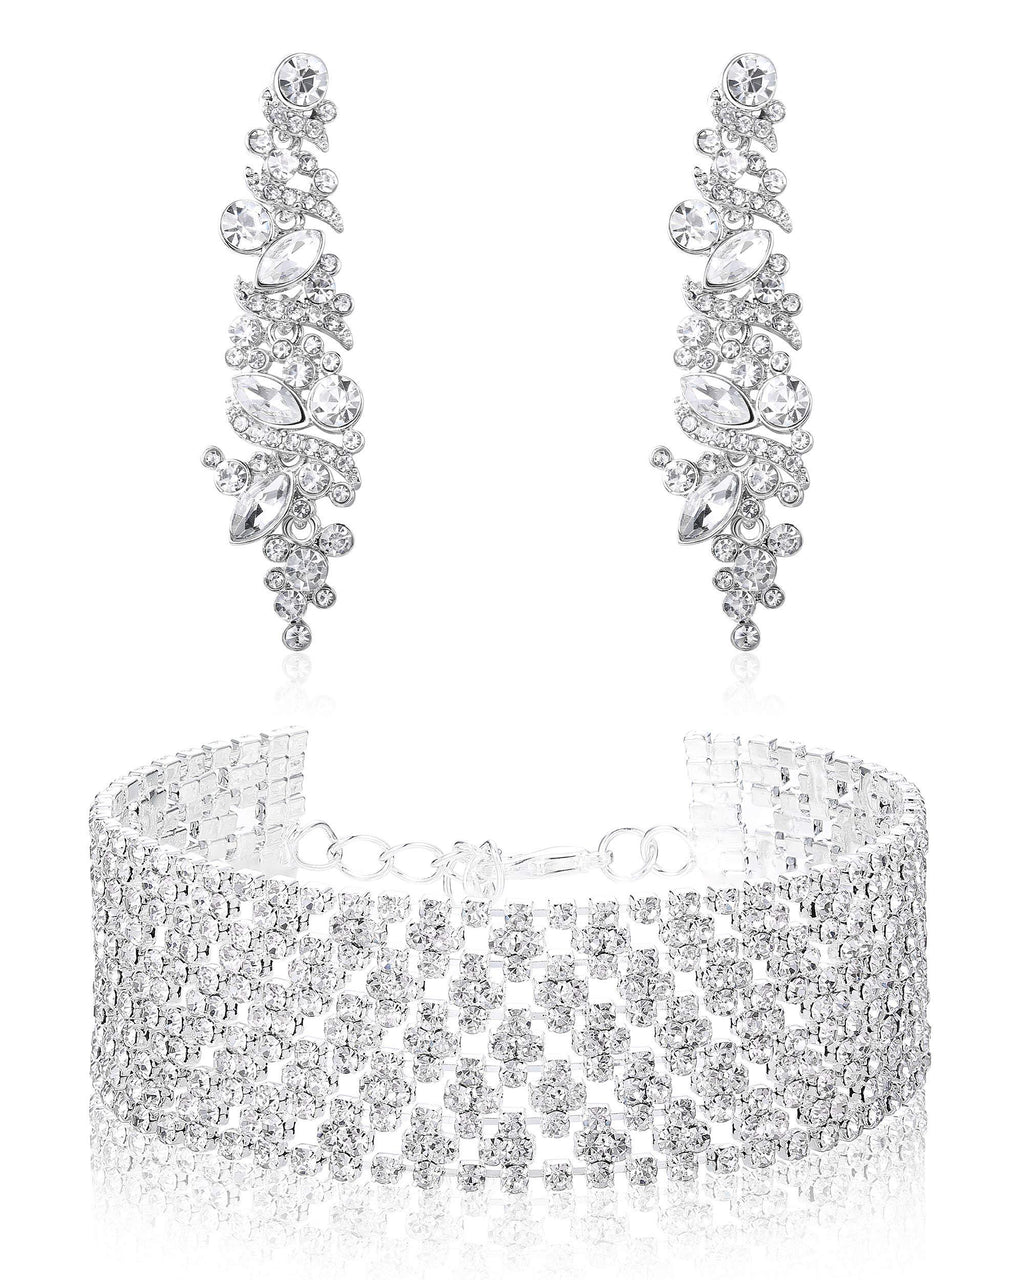 [Australia] - JOERICA Bridal Wedding Crystal Bracelet and Earrings Jewelry Set Rhinestone Dangle Earrings Adjustable Bracelet Bangle for Women Bridesmaid Jewelry Set A: Silver Tone 